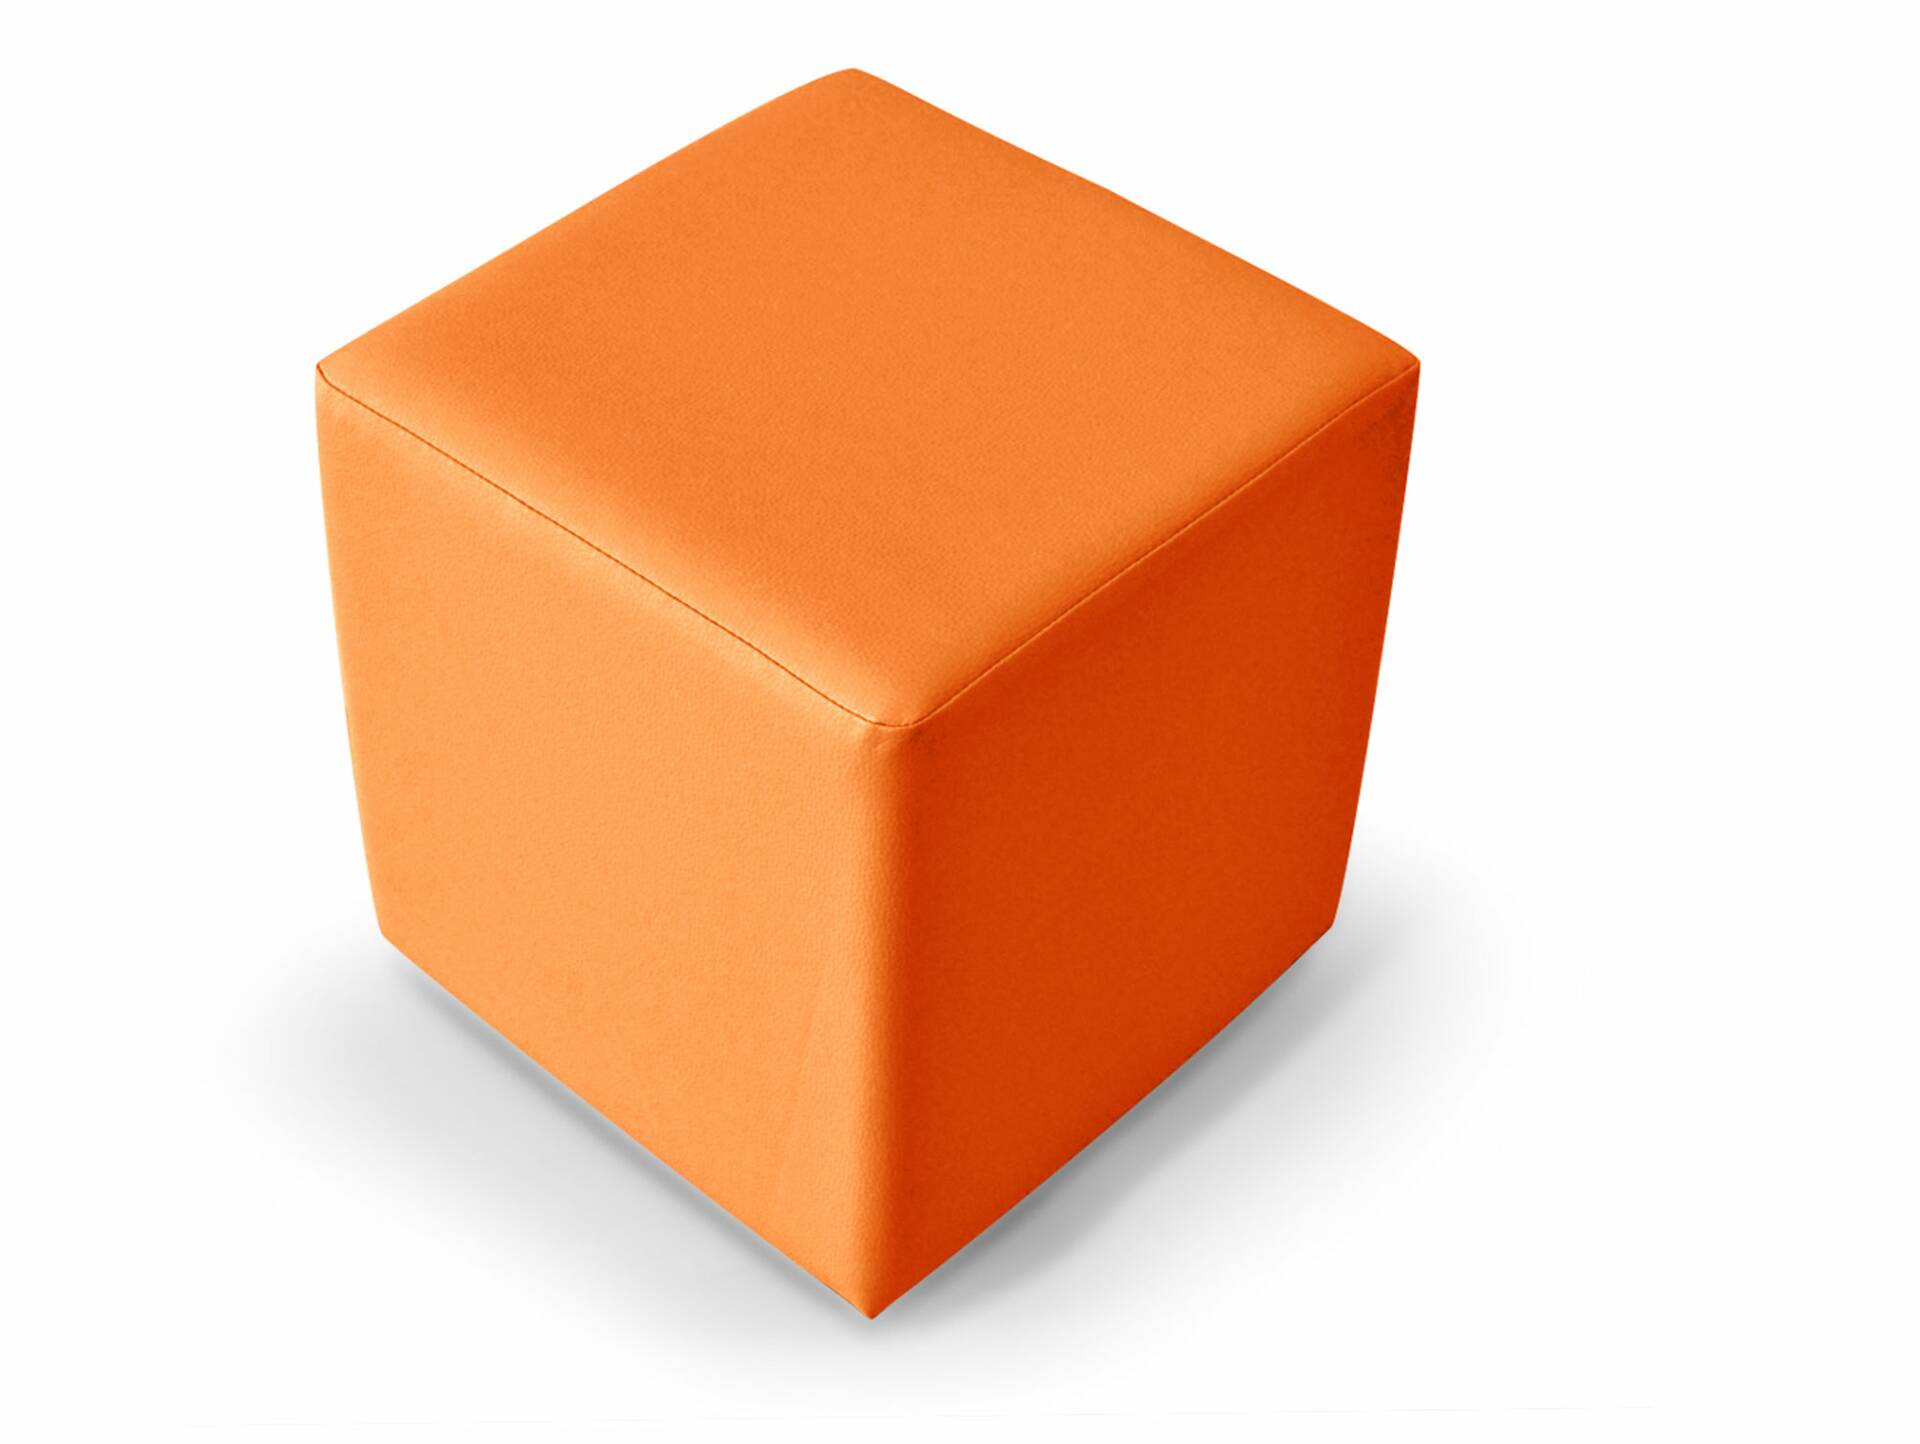 https://www.moebel-eins.de/out/pictures/generated/product/1/960_722_100/kubus-orange(1)@2x.jpg